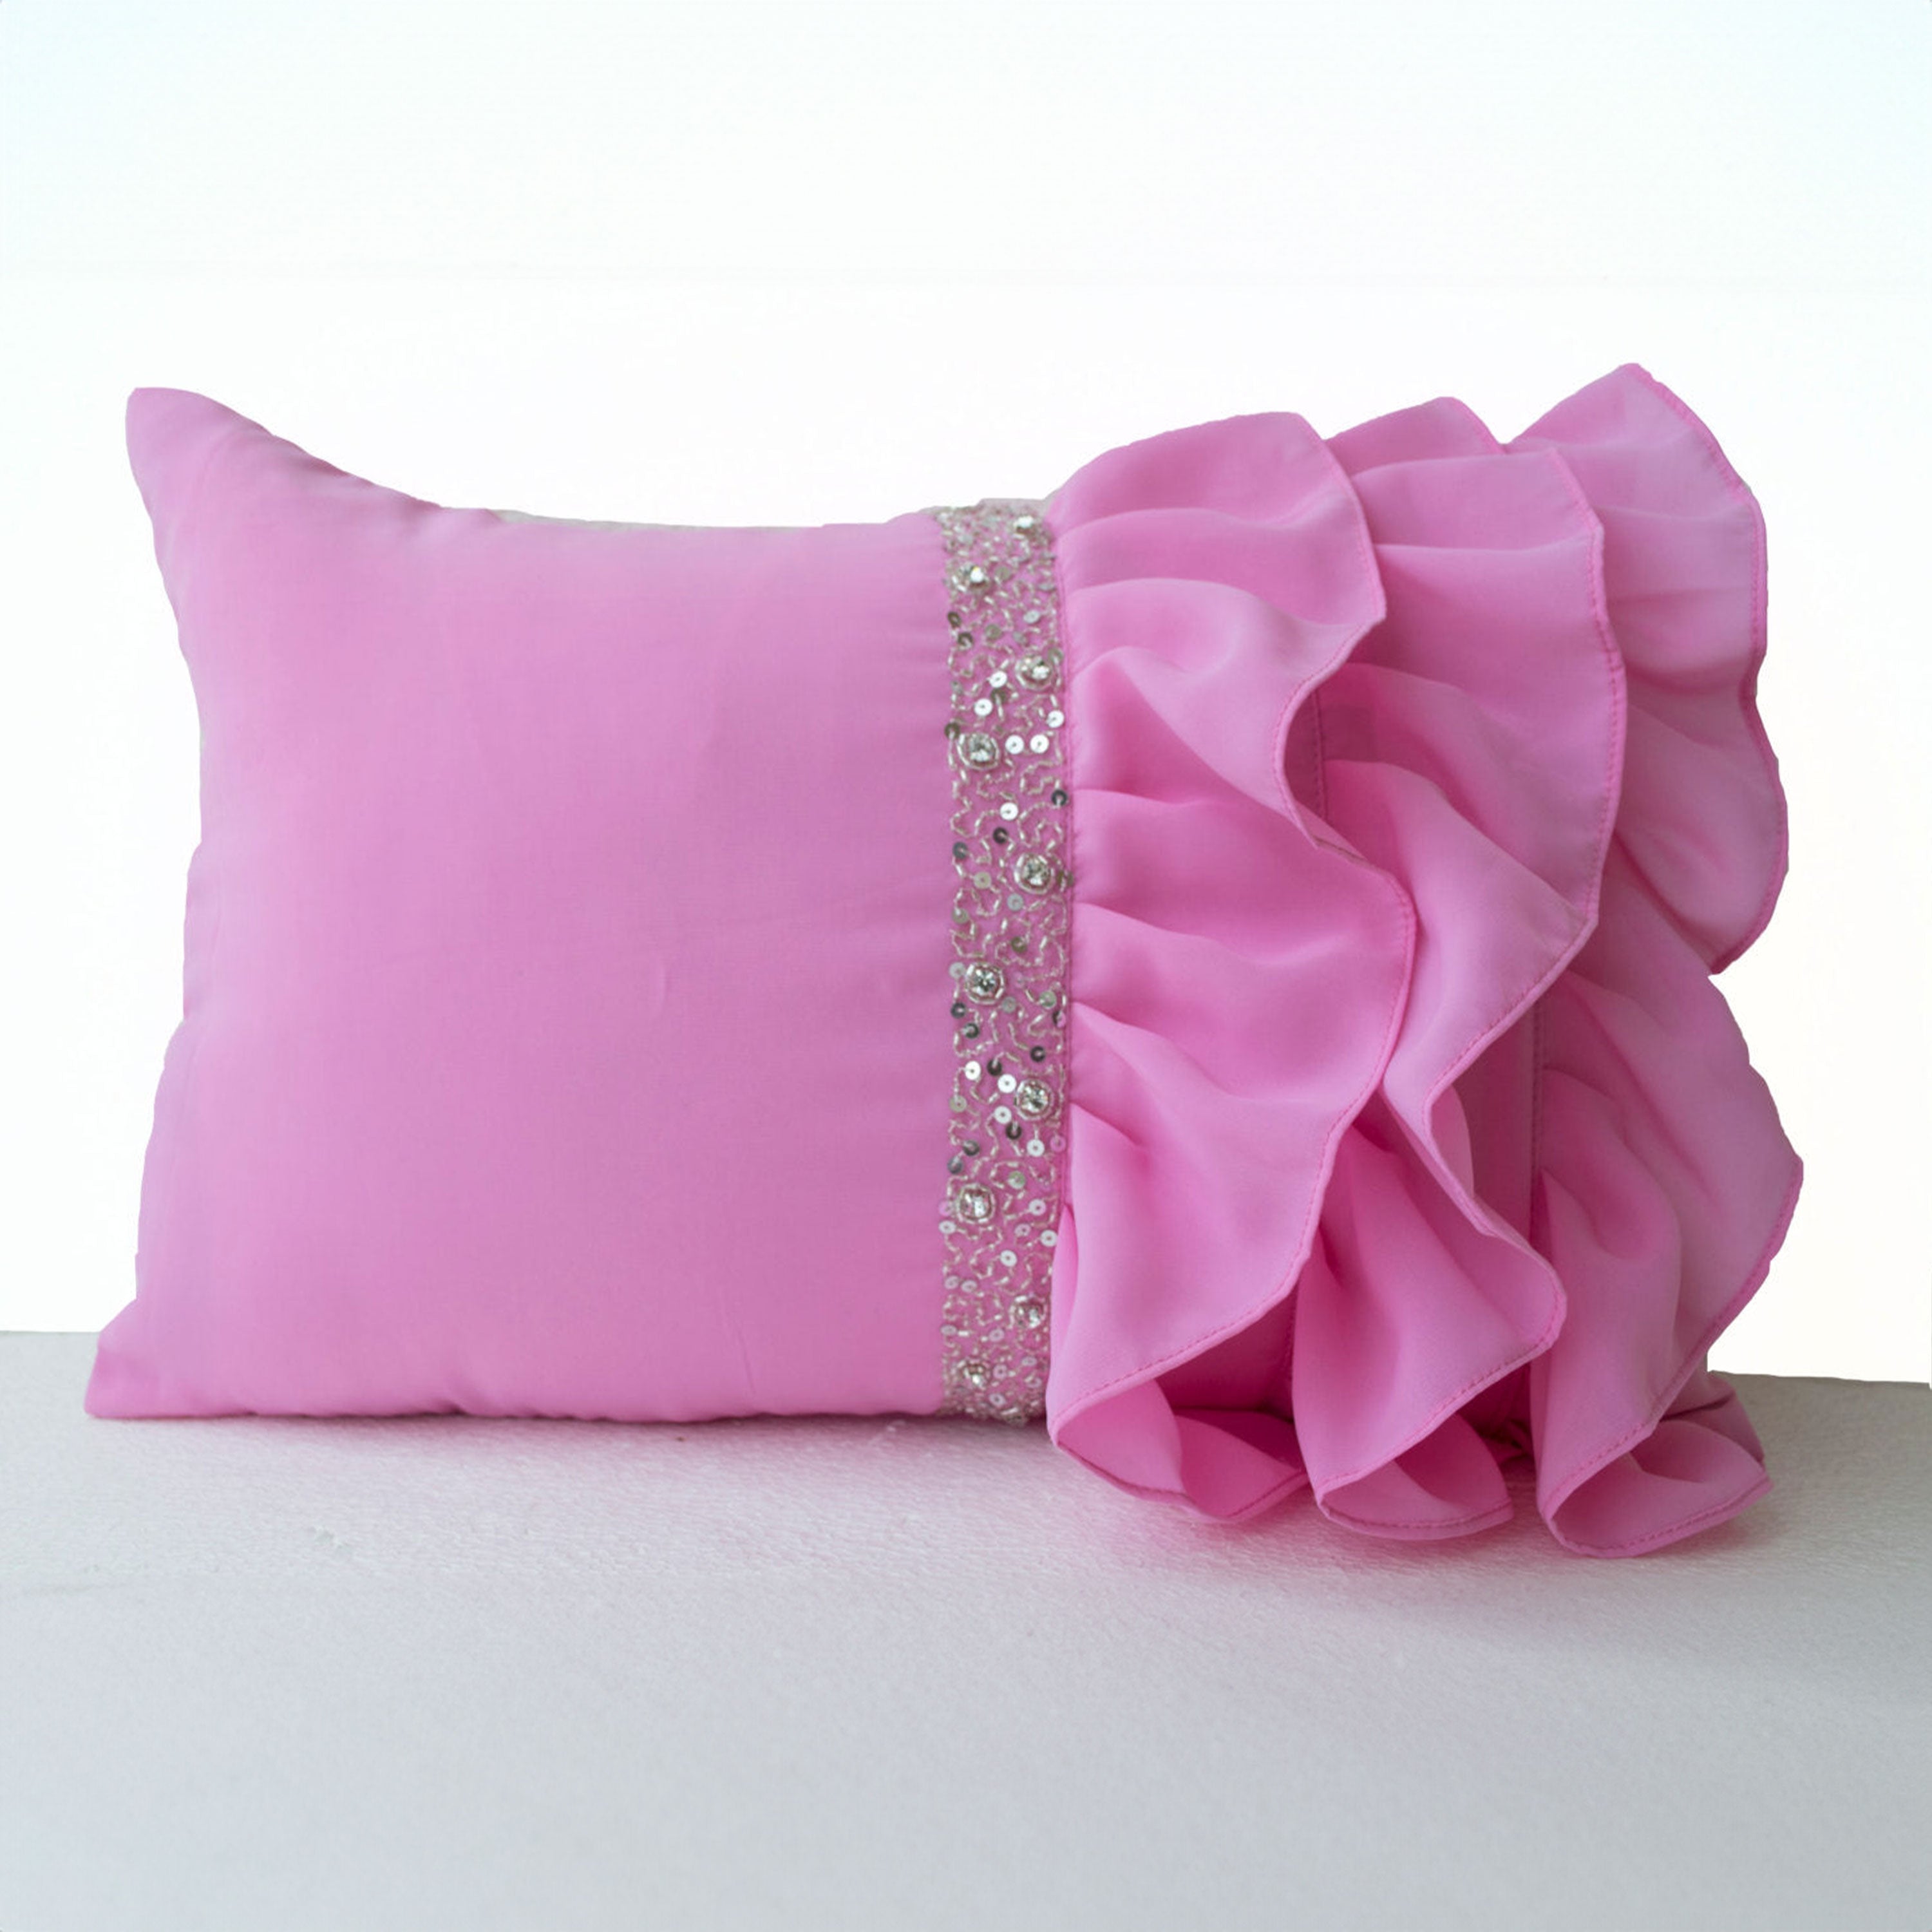 Pink ruffled pillow, Georgette Ruffle pillow covers, Pink Lumbar Pillow